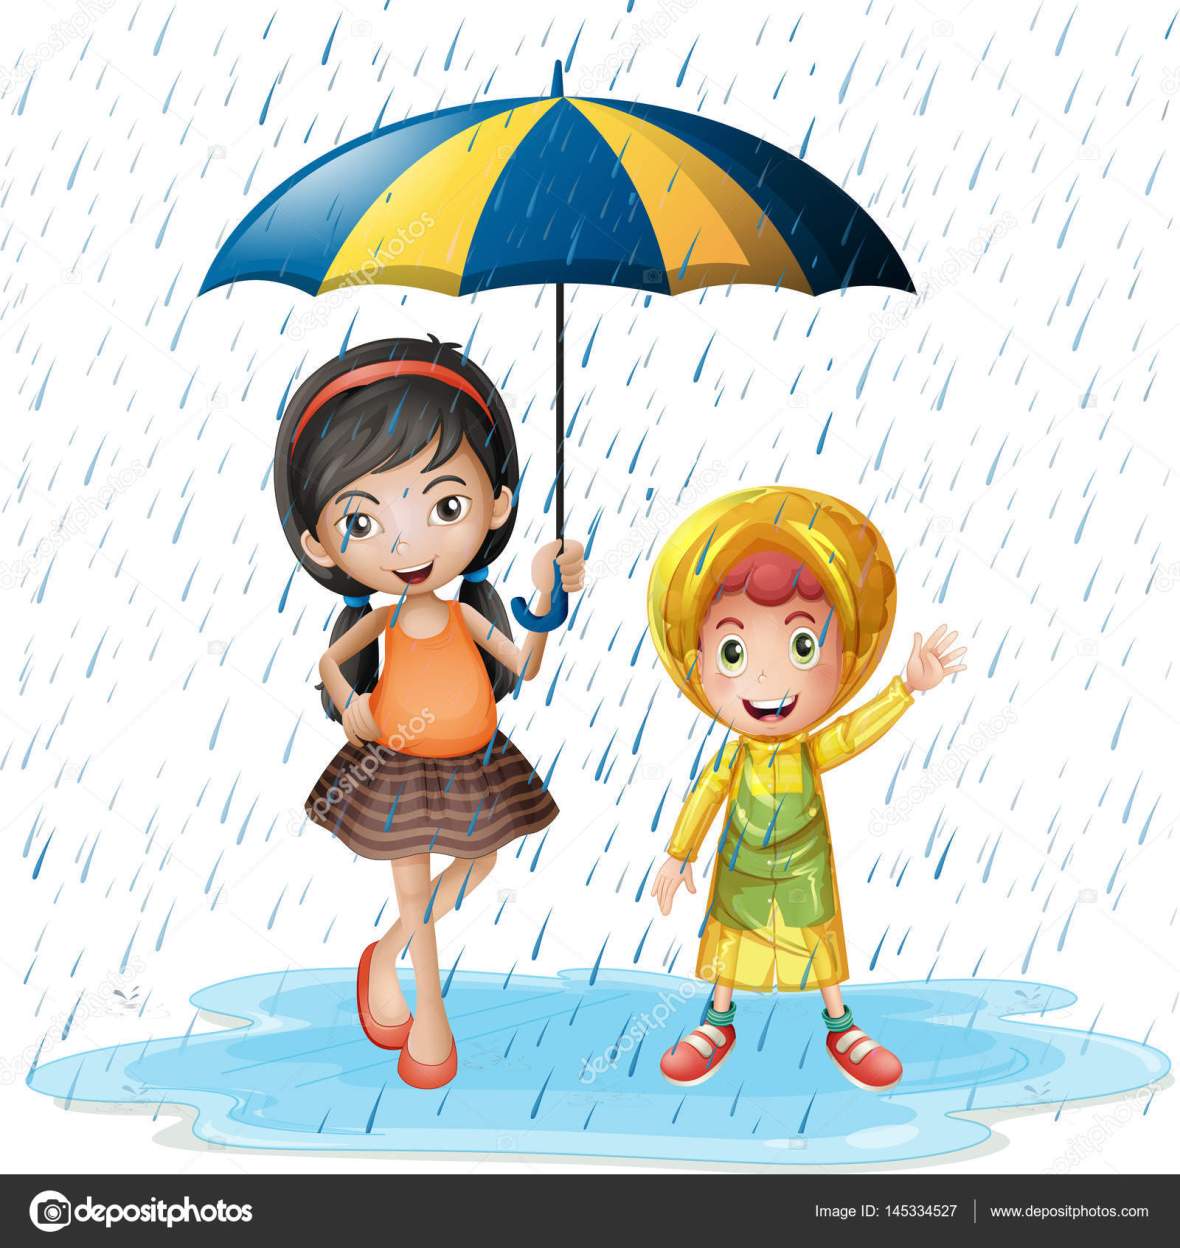 depositphotos_145334527-stock-illustration-two-kids-in-the-rain.jpg